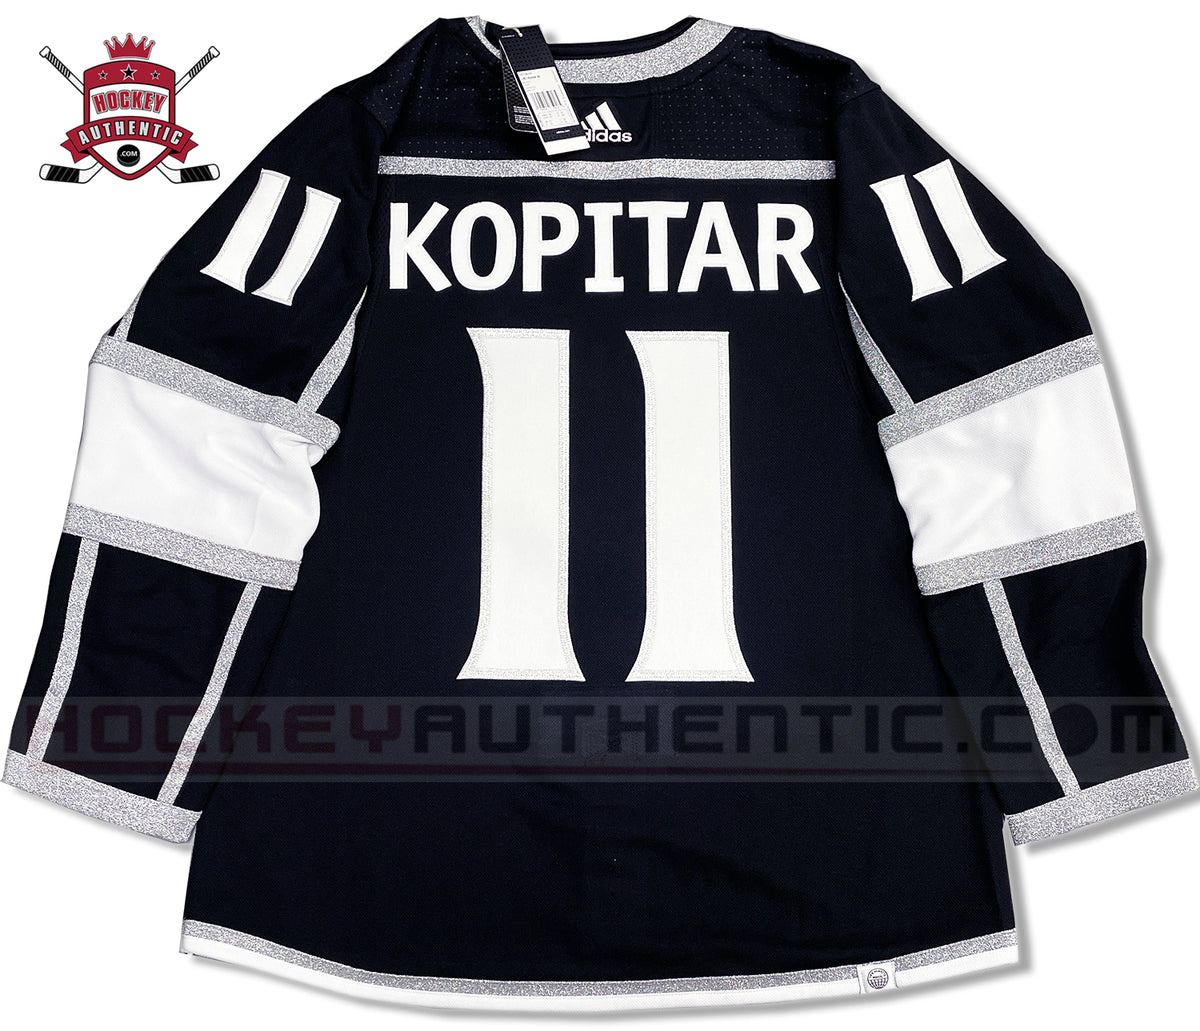 Phillip Danault Los Angeles Kings Adidas Primegreen Authentic NHL Hockey Jersey - Third Alternate / XS/44